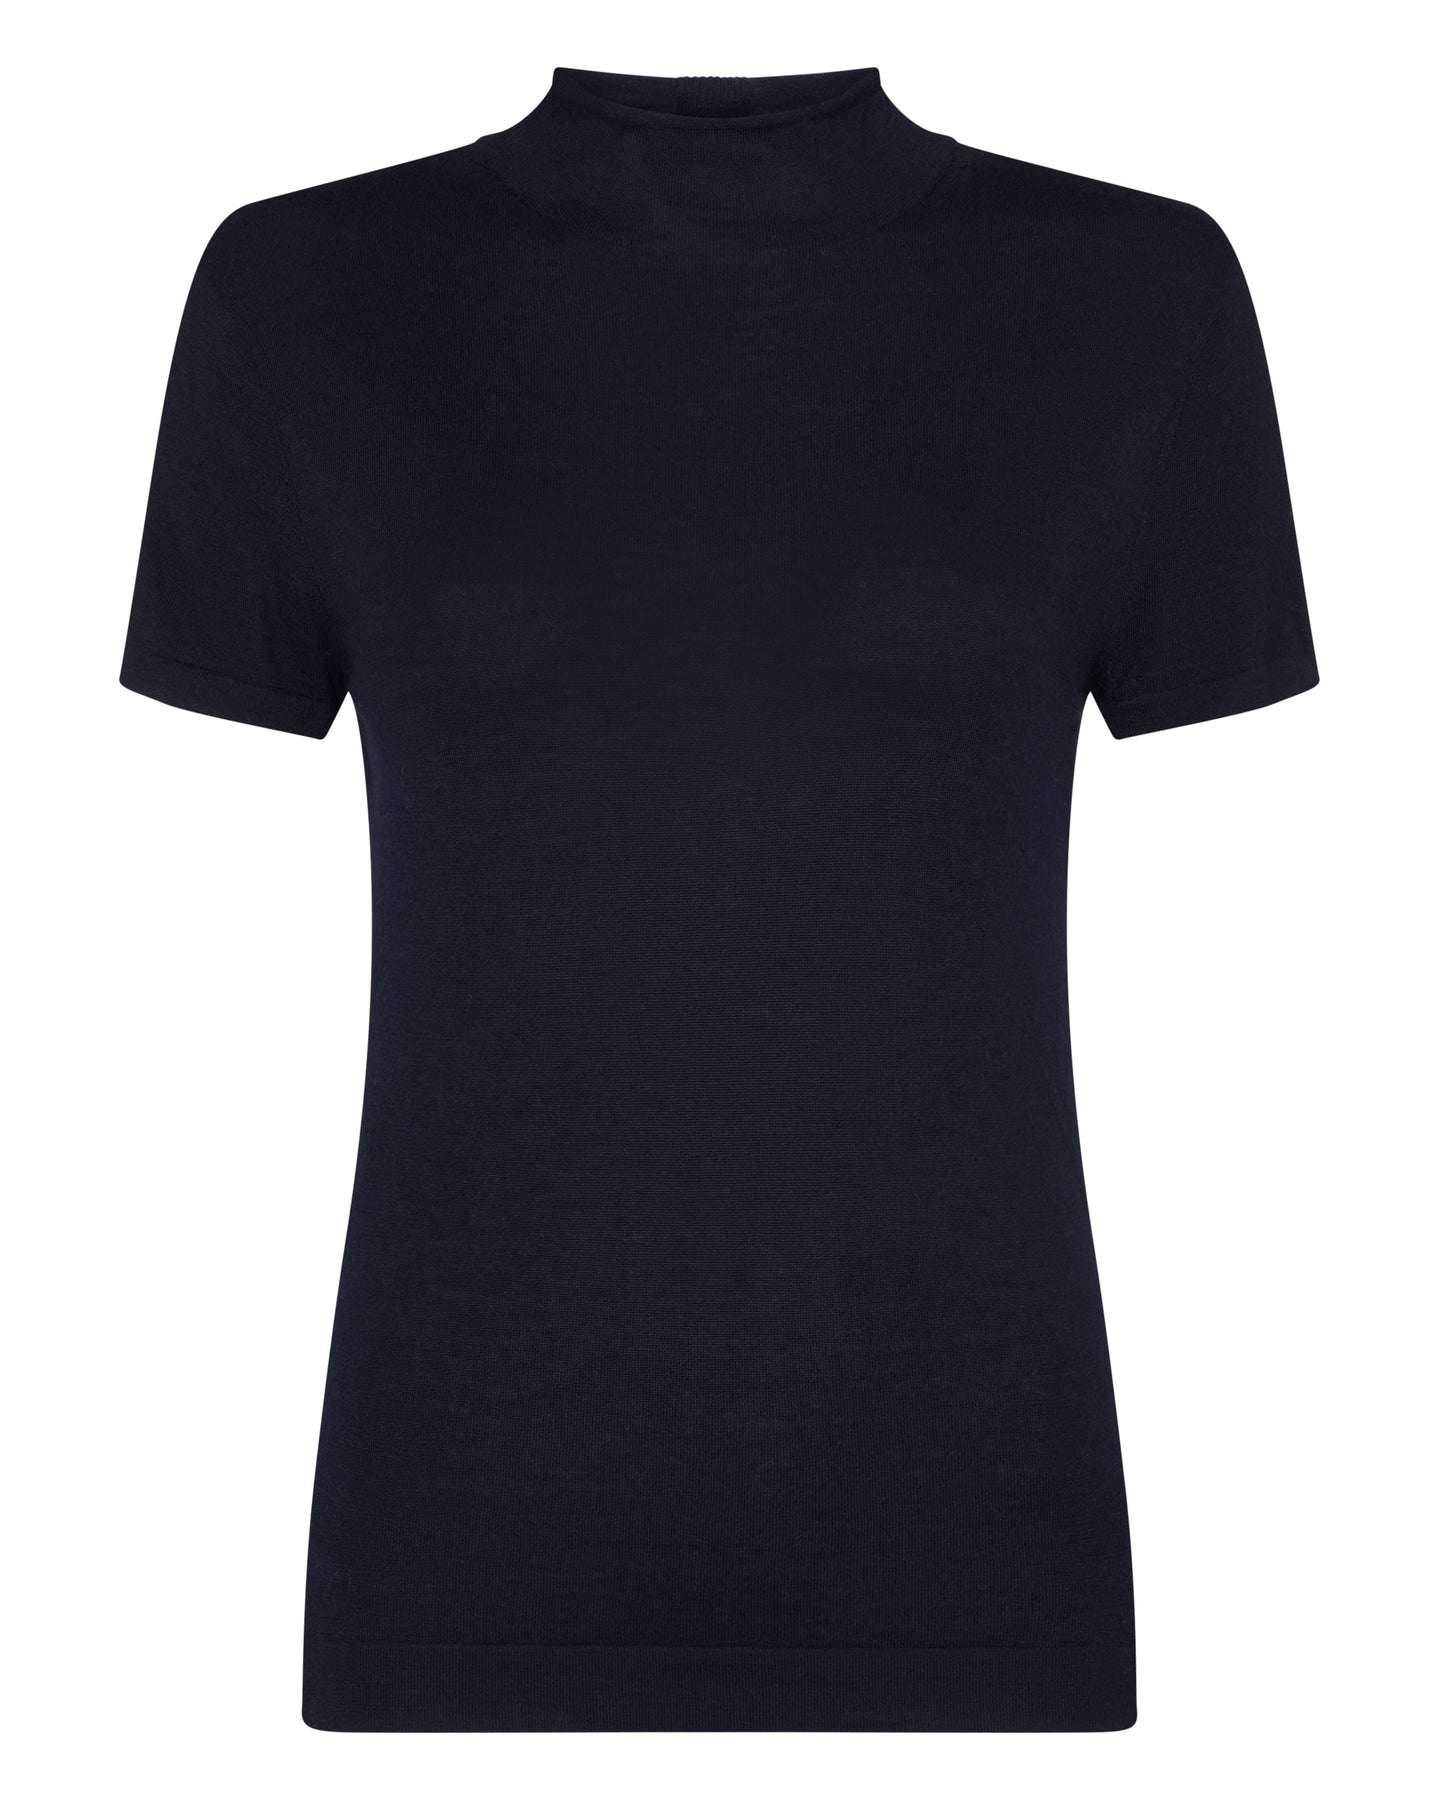 N.Peal Women's Superfine Mock Neck Cashmere T-Shirt Navy Blue